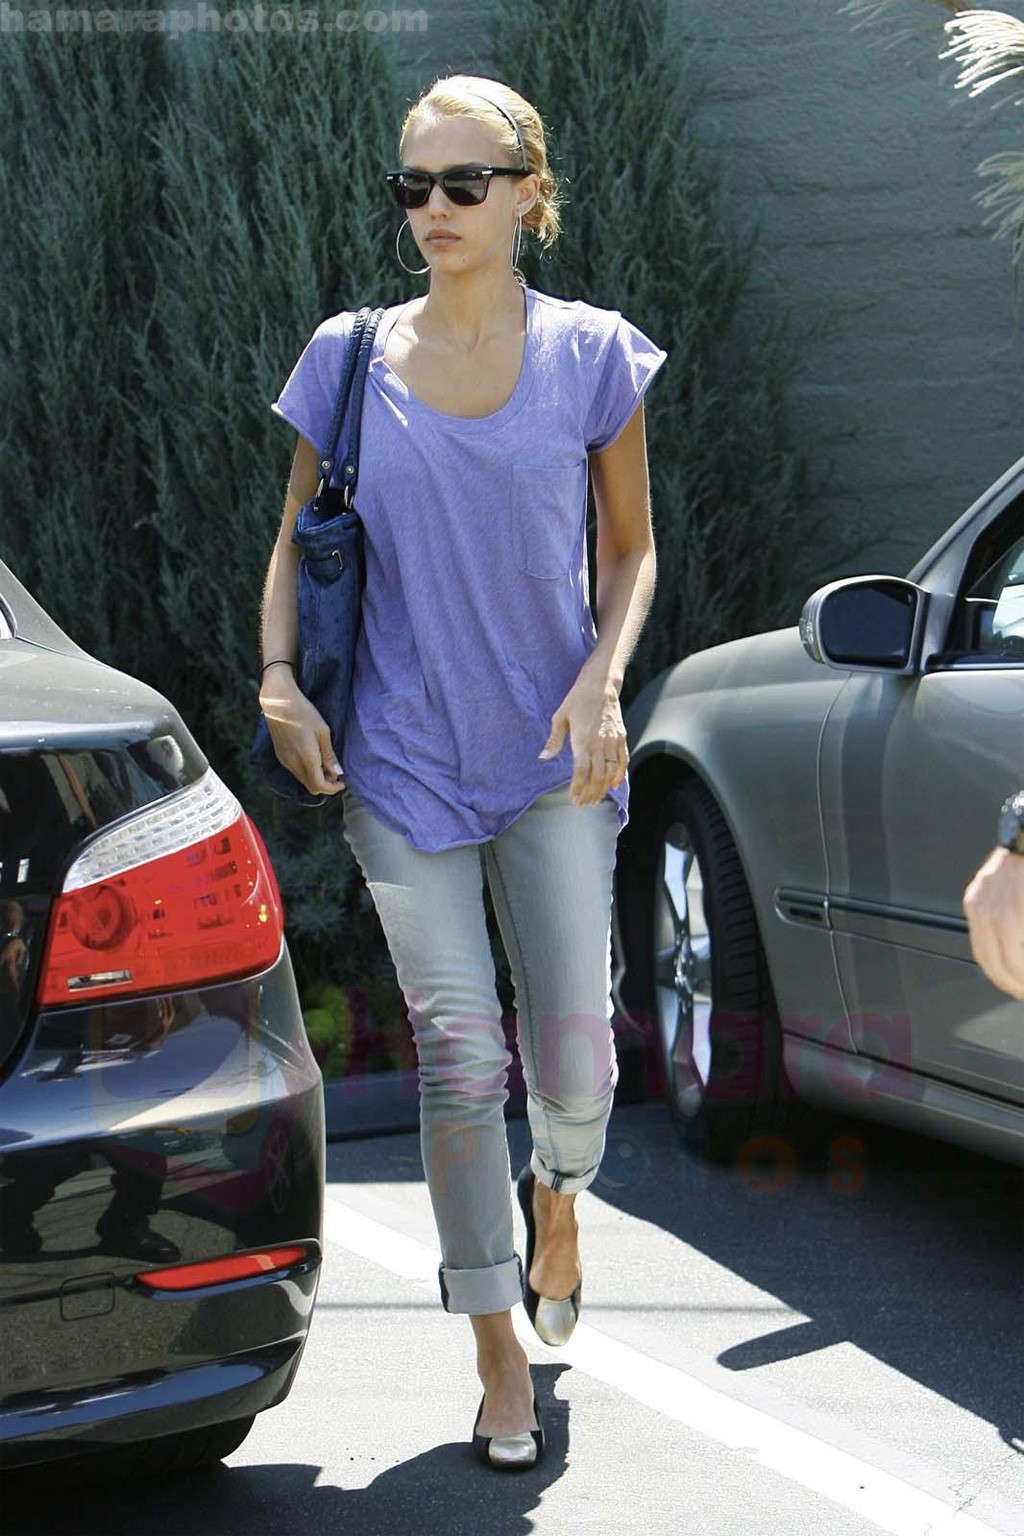 Jessica Alba out running errands in Santa Monica, Los Angeles, California on 27th August 2009 - IANS-WENN